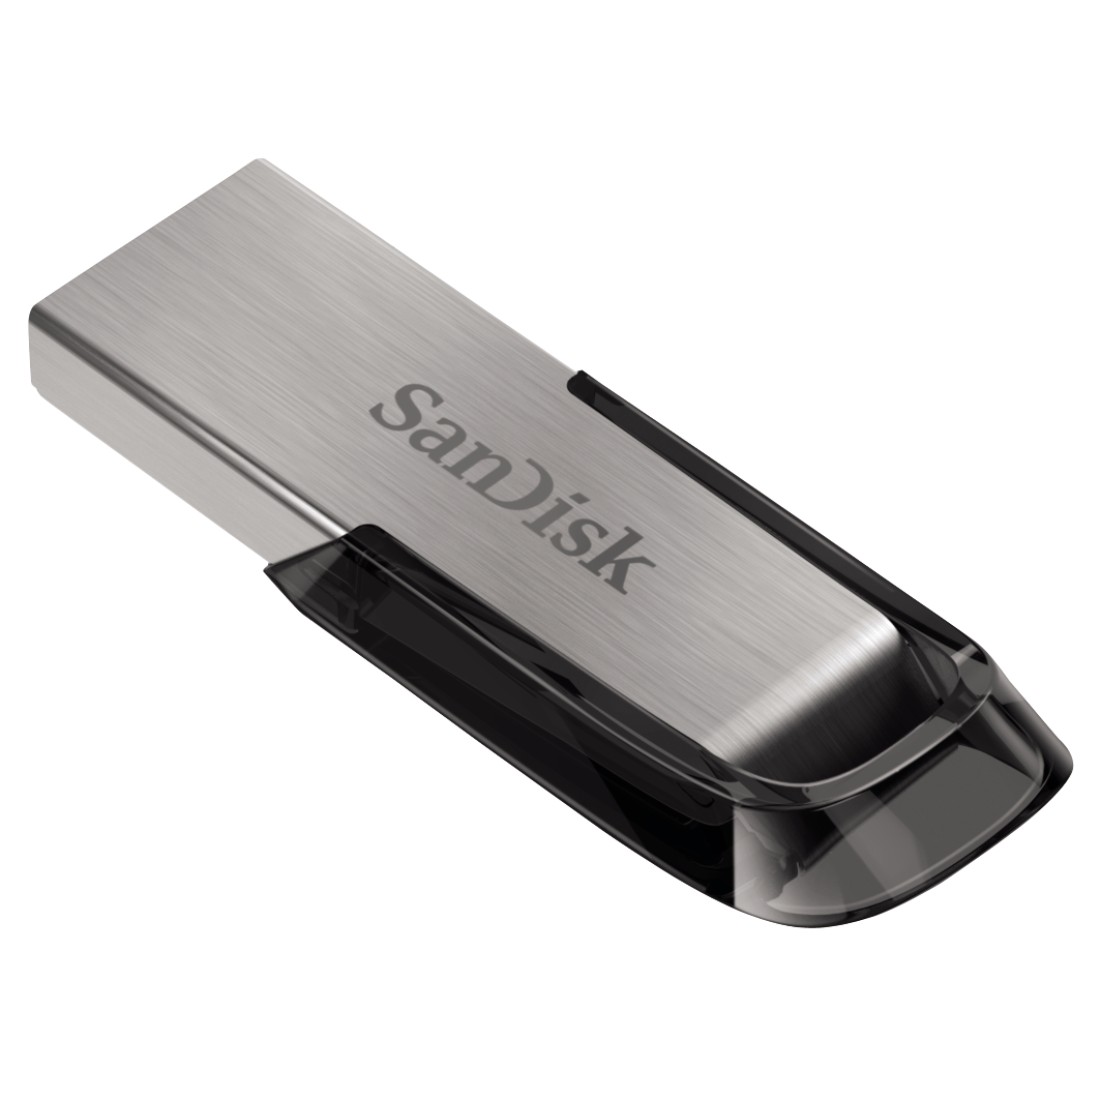 SanDisk Ultra Flair/ 64GB/ 150MBps/ USB 3.0/ USB-A/ Čierna 